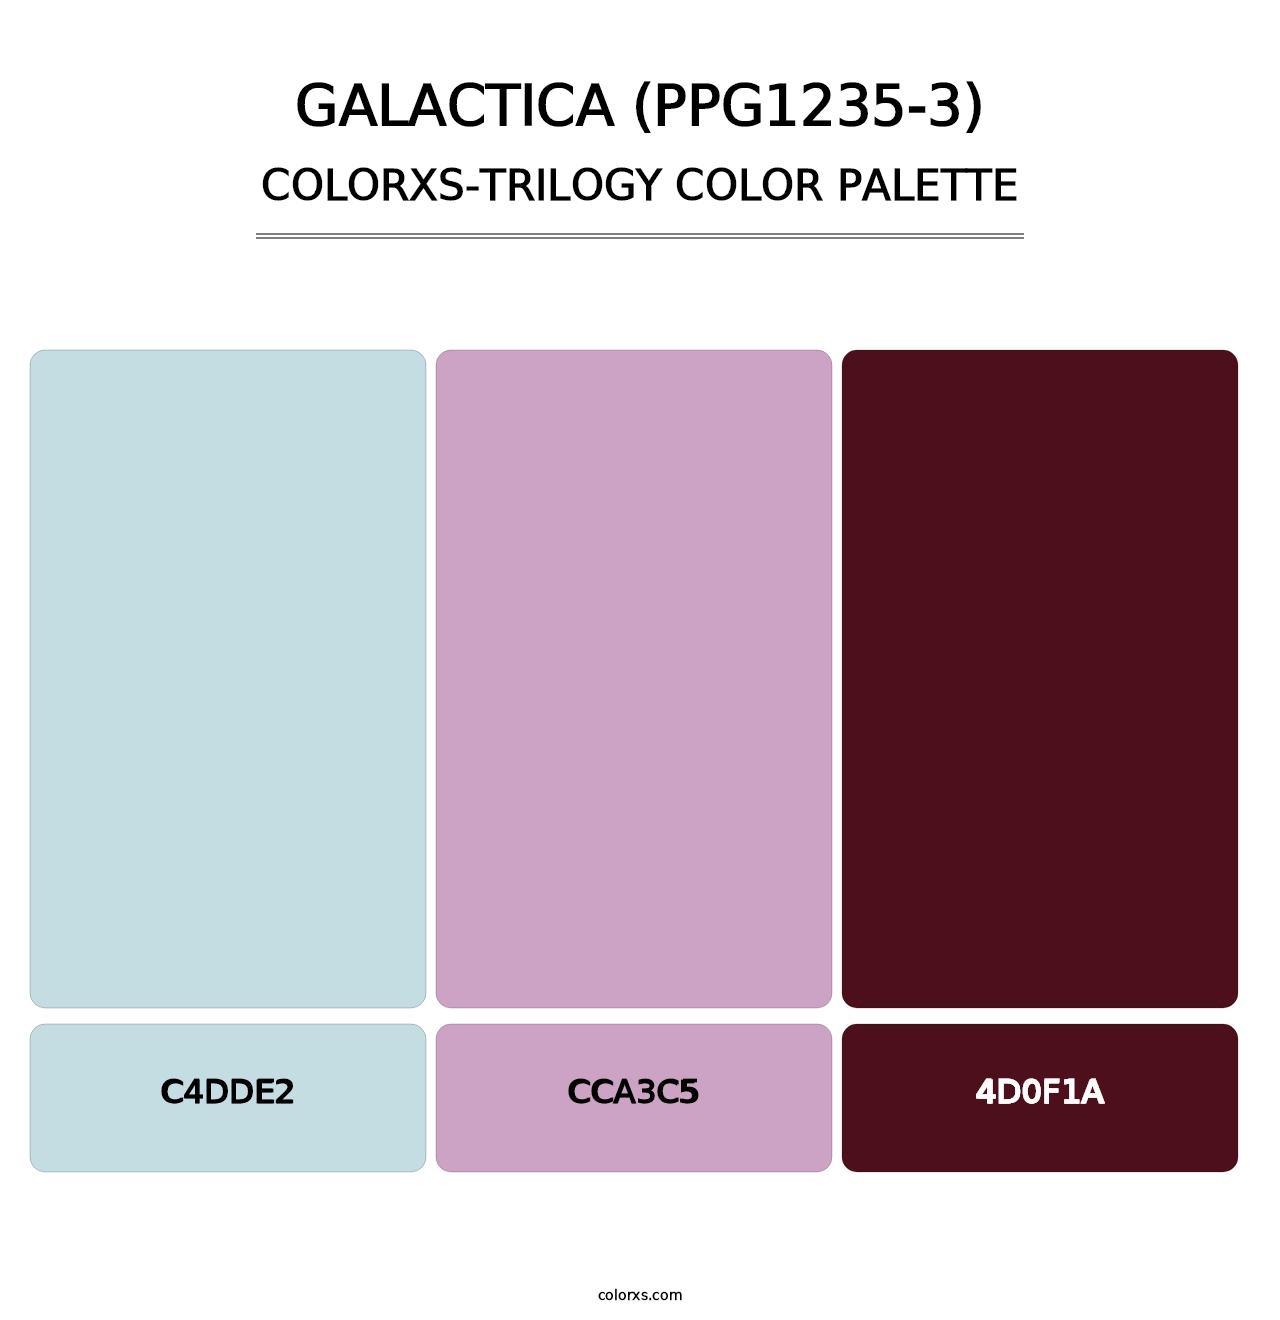 Galactica (PPG1235-3) - Colorxs Trilogy Palette